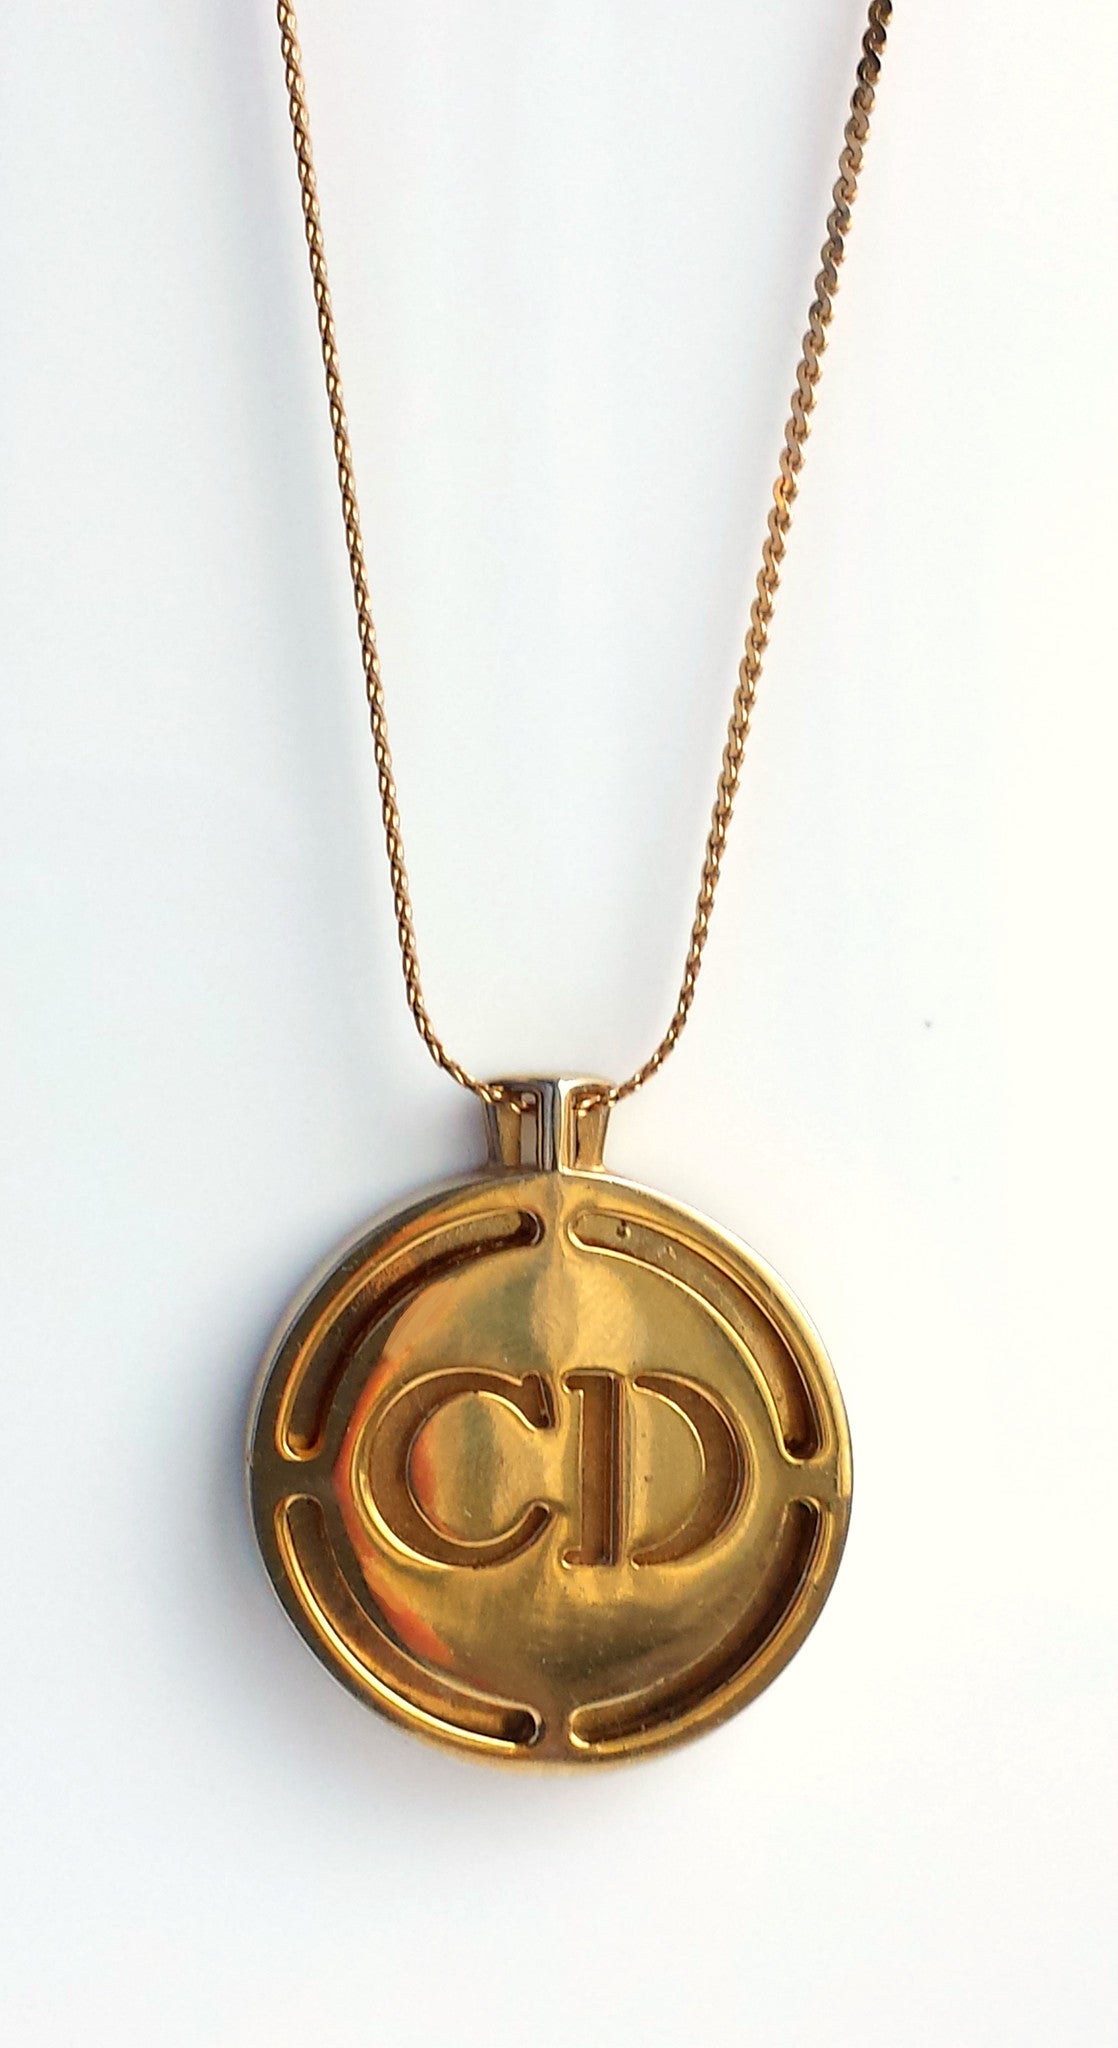 Christian Dior Dioressence Perfum CD Monogrammed Pendant 23 inch Chain